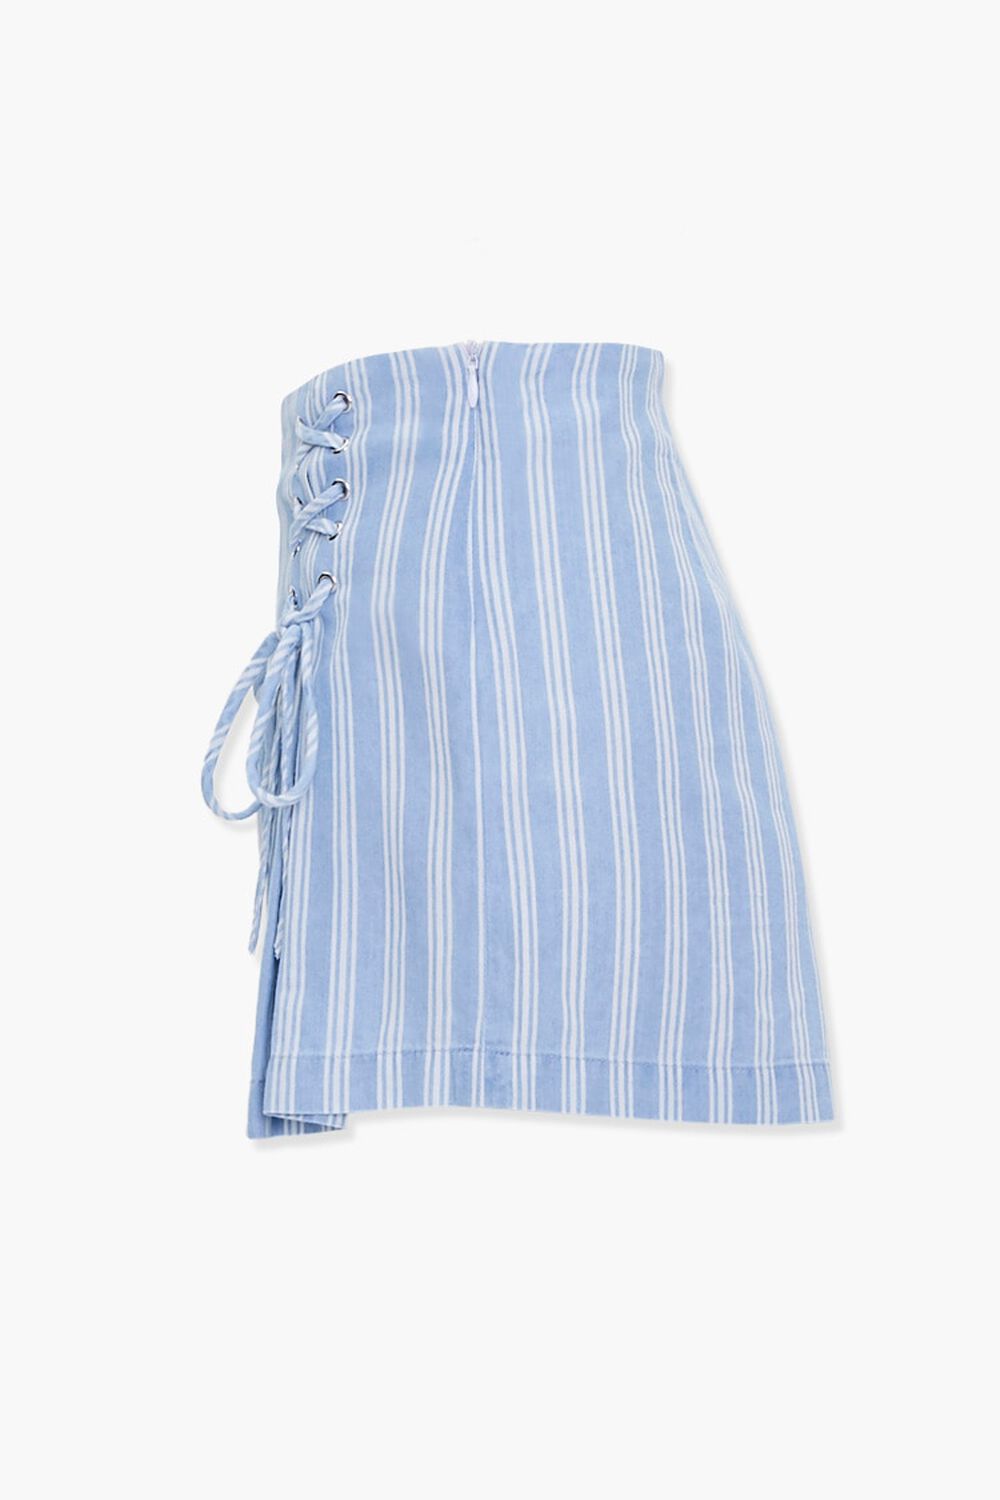 Striped Lace-Up Shorts, image 2